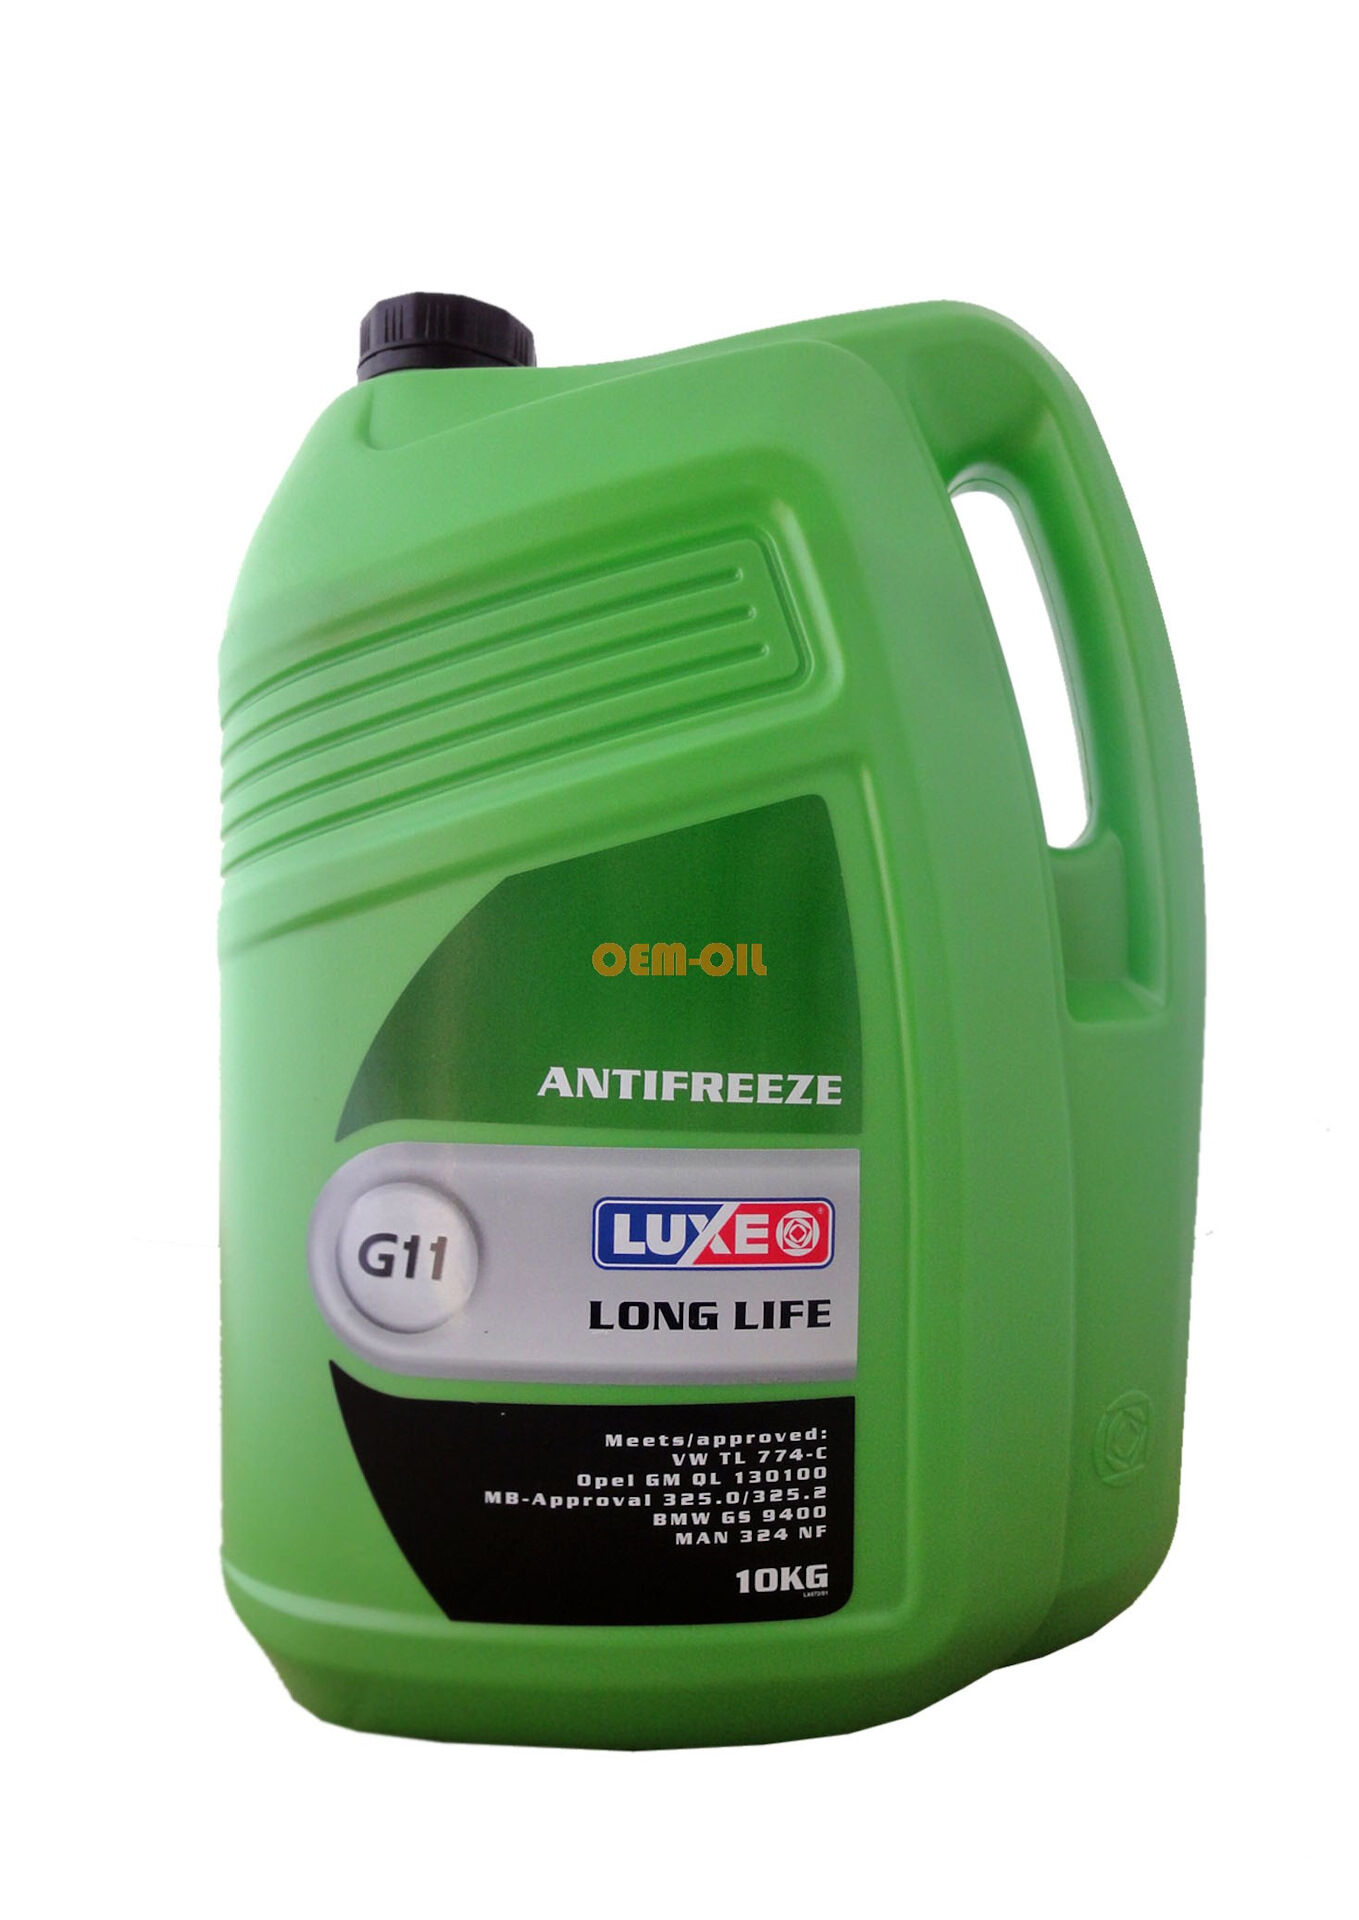 Tl 774. Антифриз зеленый g11 Luxe. Антифриз Luxe g11 зеленый, 1 л. Антифриз Luxe long Life g11 зеленый. Antifreeze g11 зеленый 10кг.